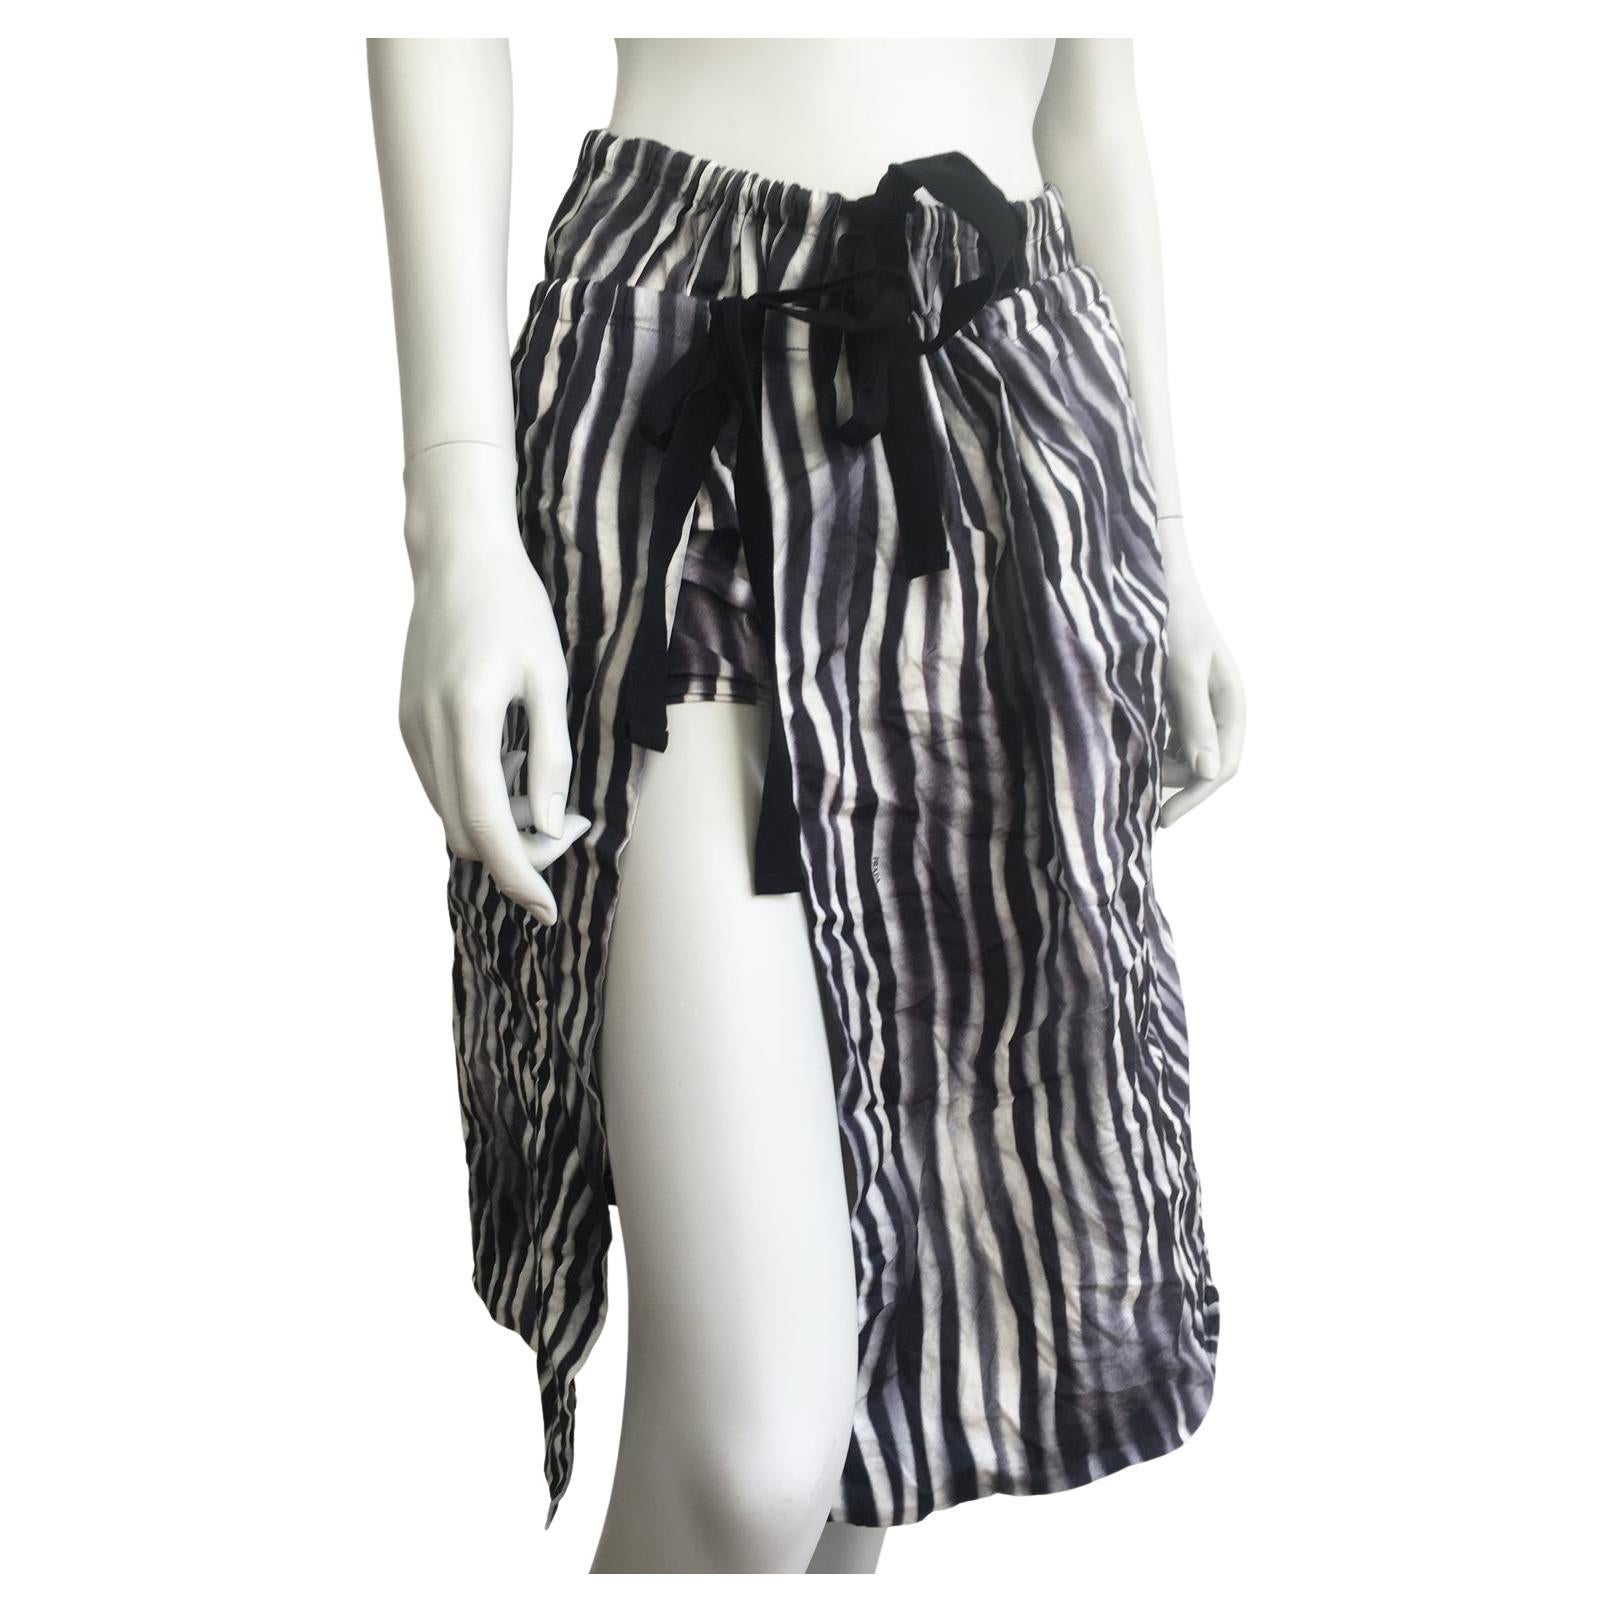 Prada Black White Crinkled Shorts And Skirt Collection S/S 2009 